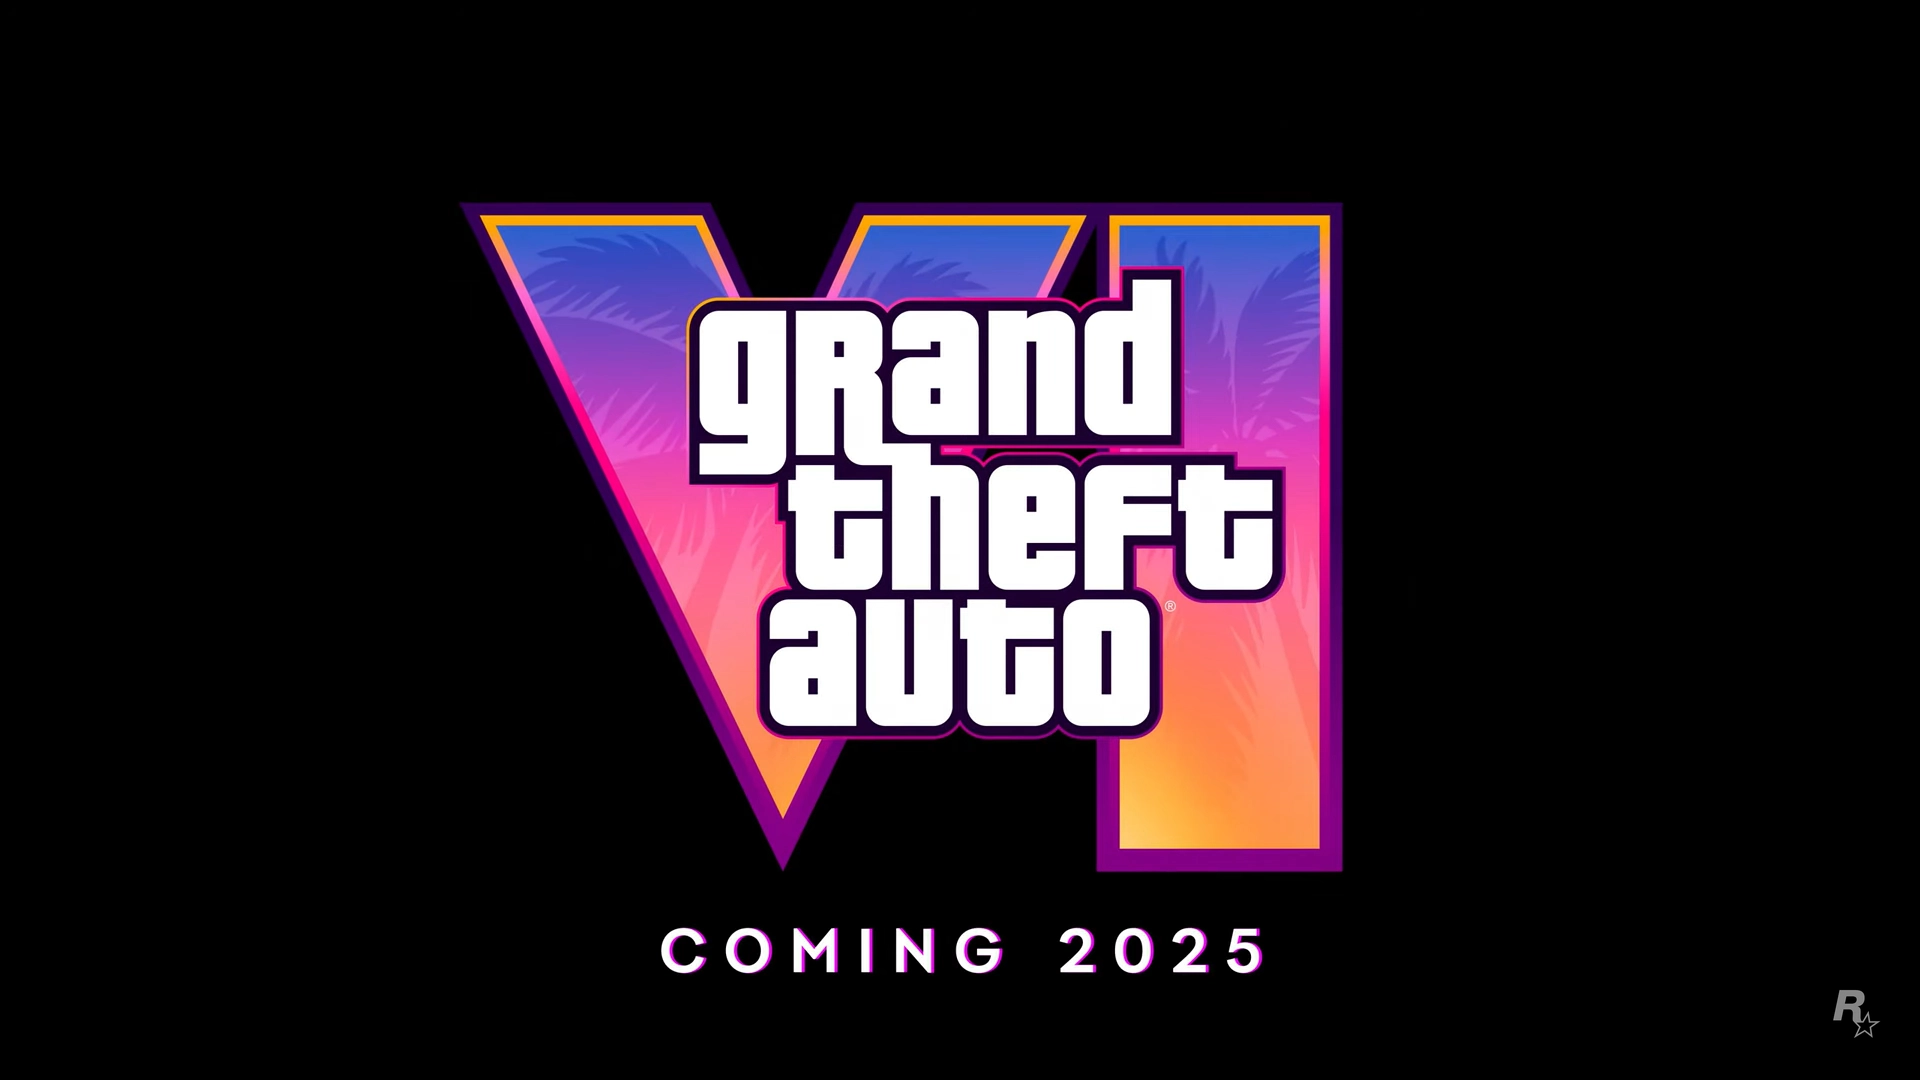 GTA 6 Trailer Released Early After Leak, Debuting in 2025